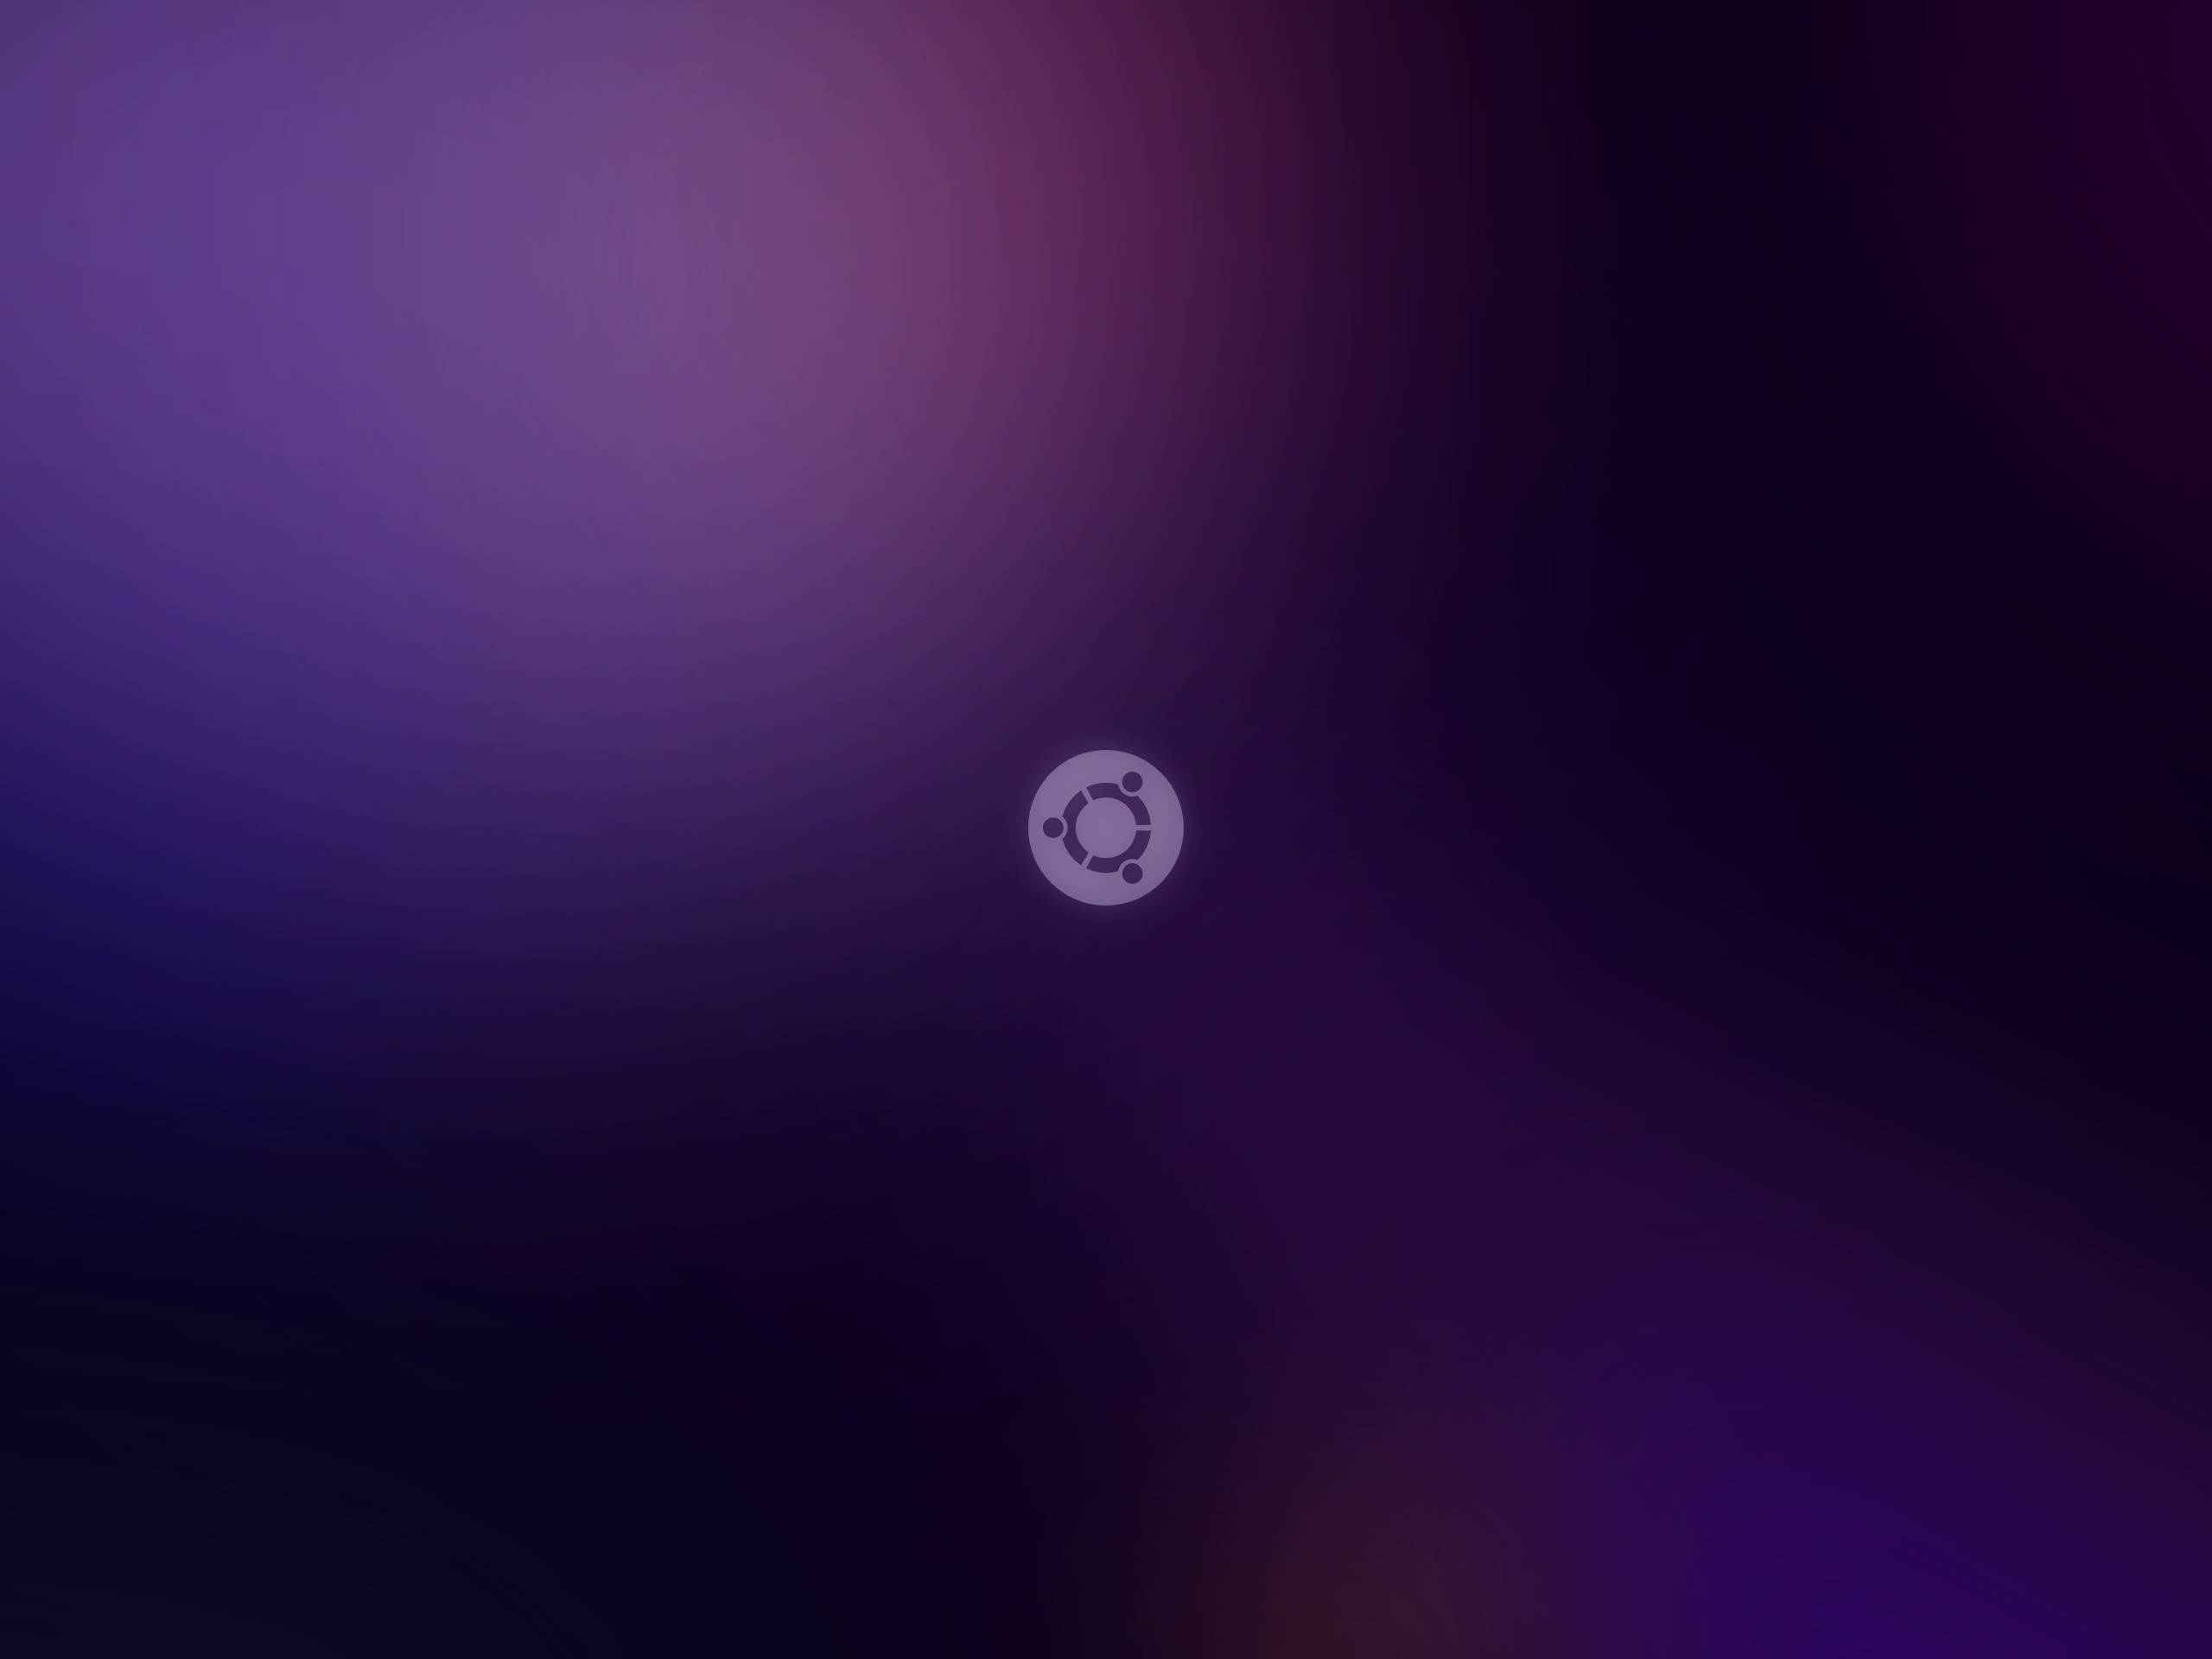 Wallpaper Ubuntu Release Date Specs Re Redesign And Price